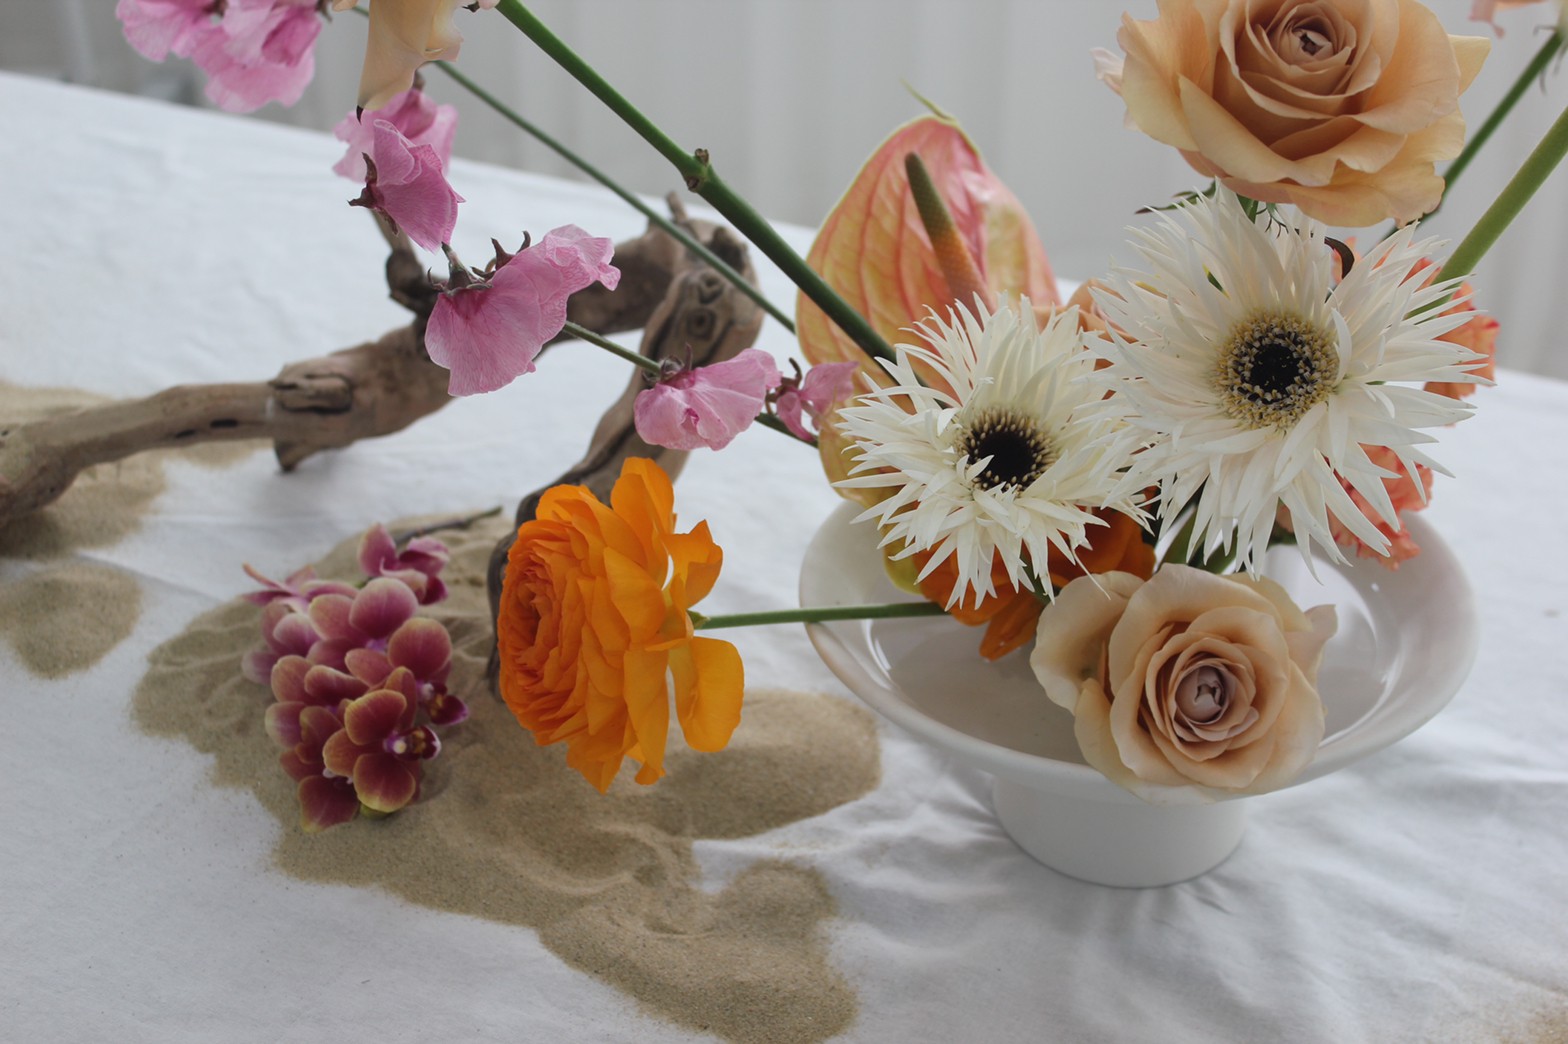 【Soup.+instagramers】rina 春のお花たち。